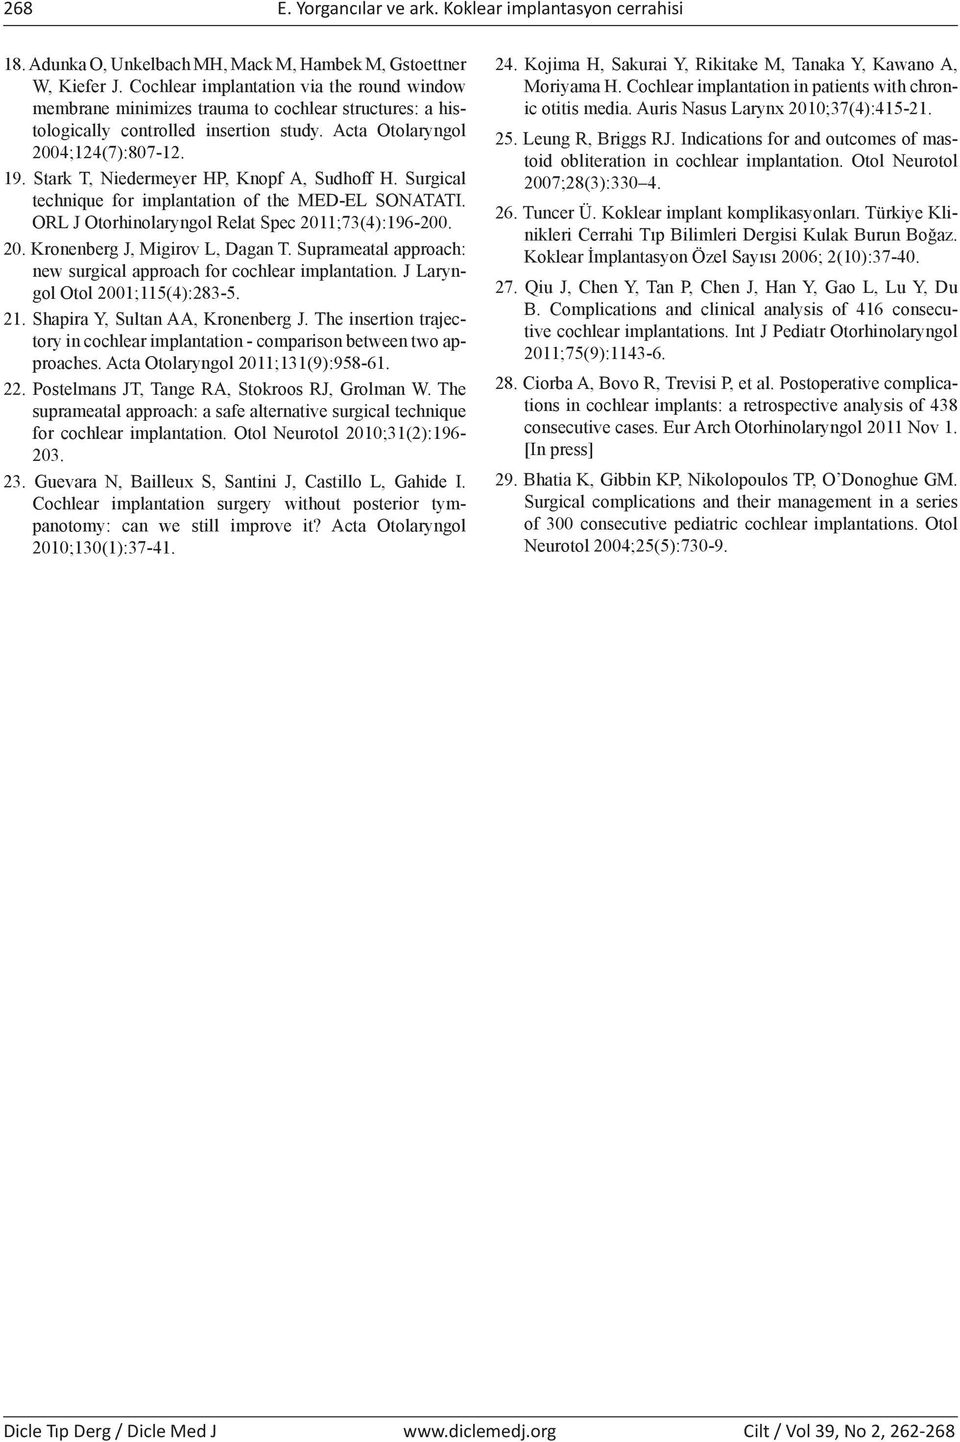 Stark T, Niedermeyer HP, Knopf A, Sudhoff H. Surgical technique for implantation of the MED-EL SONATATI. ORL J Otorhinolaryngol Relat Spec 2011;73(4):196-200. 20. Kronenberg J, Migirov L, Dagan T.